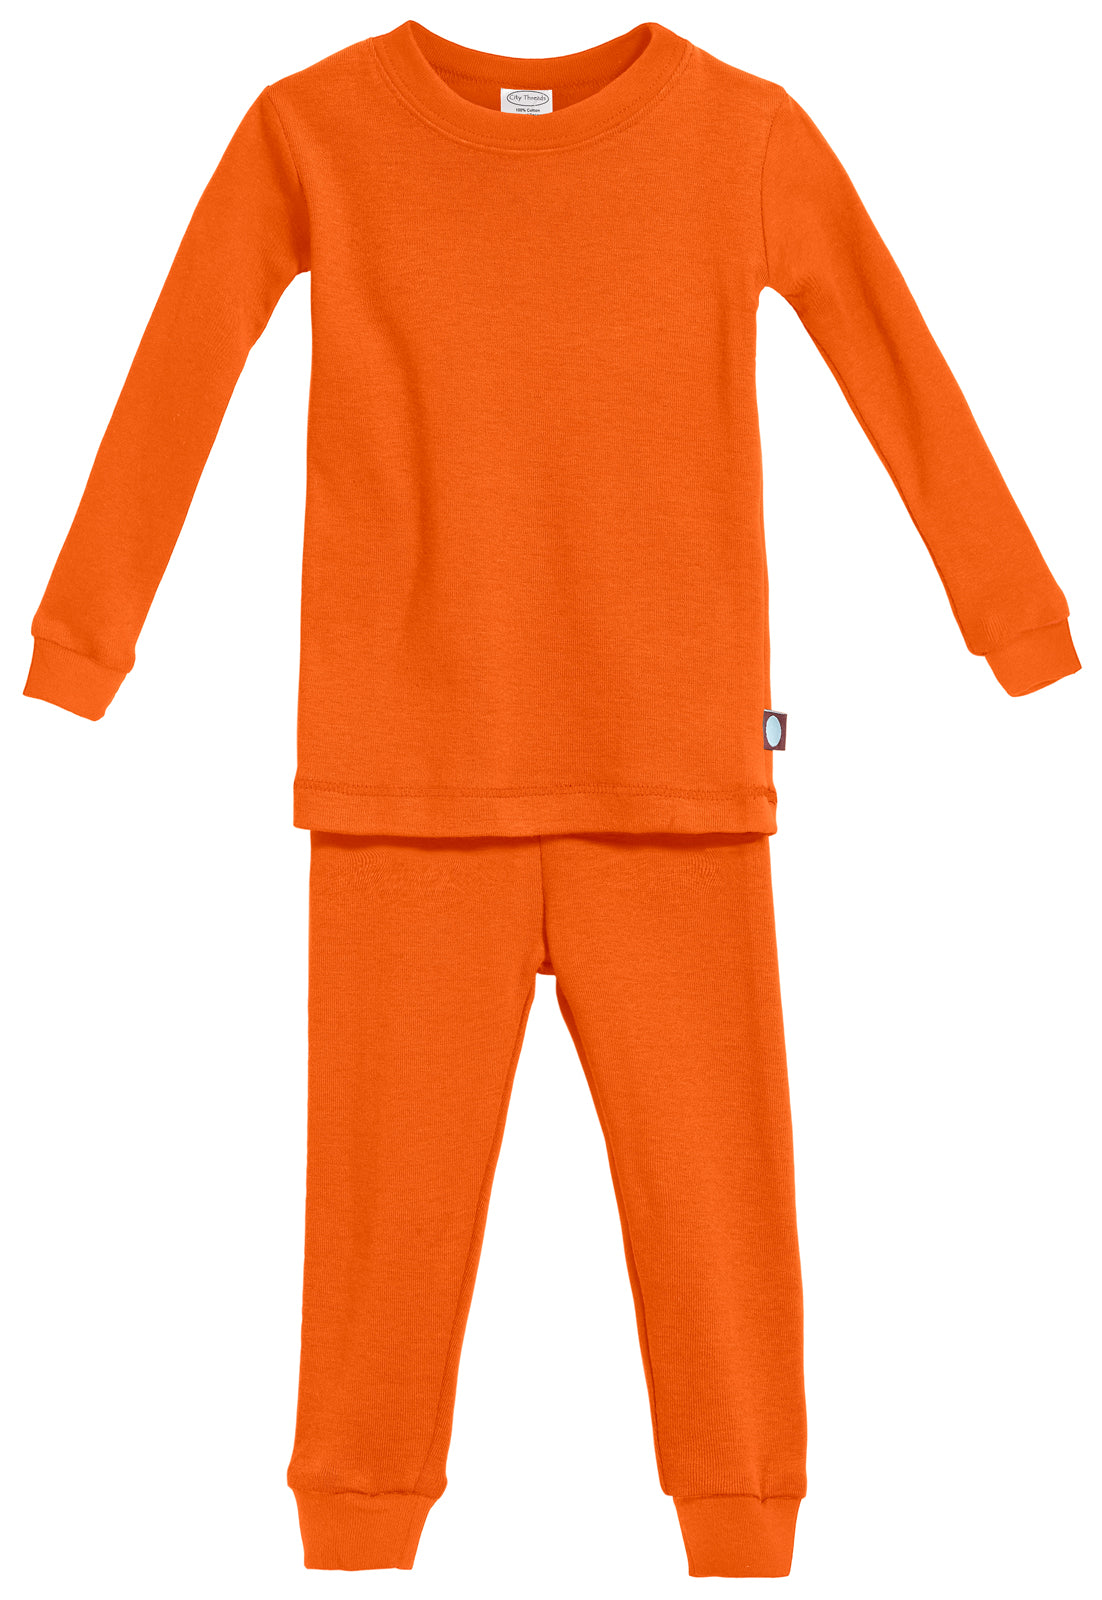 Mix & Match Thermal Pajama Top - Orange